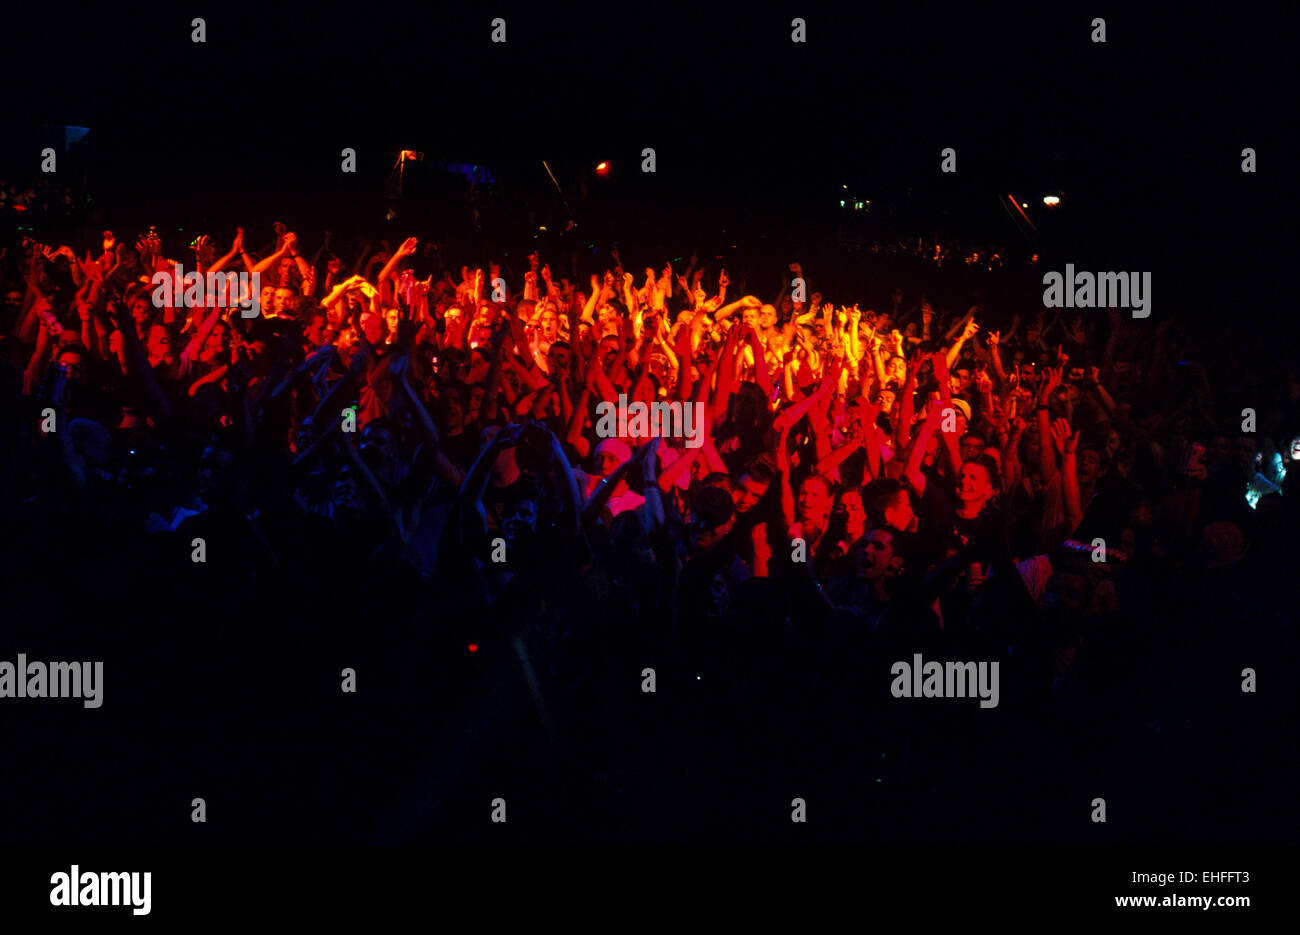 Crowd scene in a nightclub 2003. Stock Photo